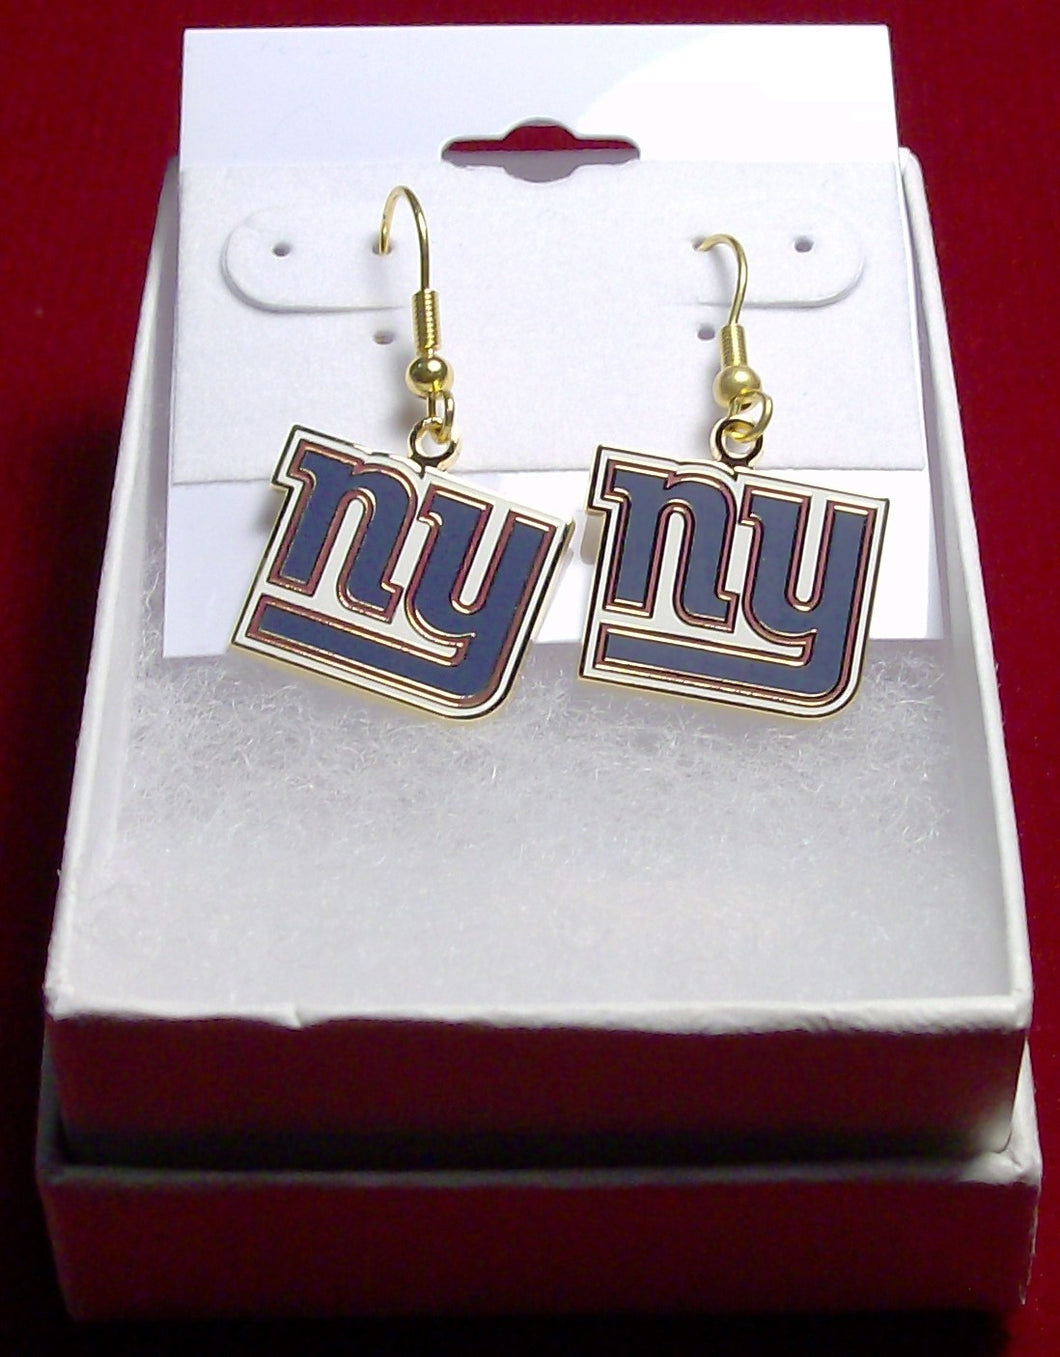 New York Giants Earrings